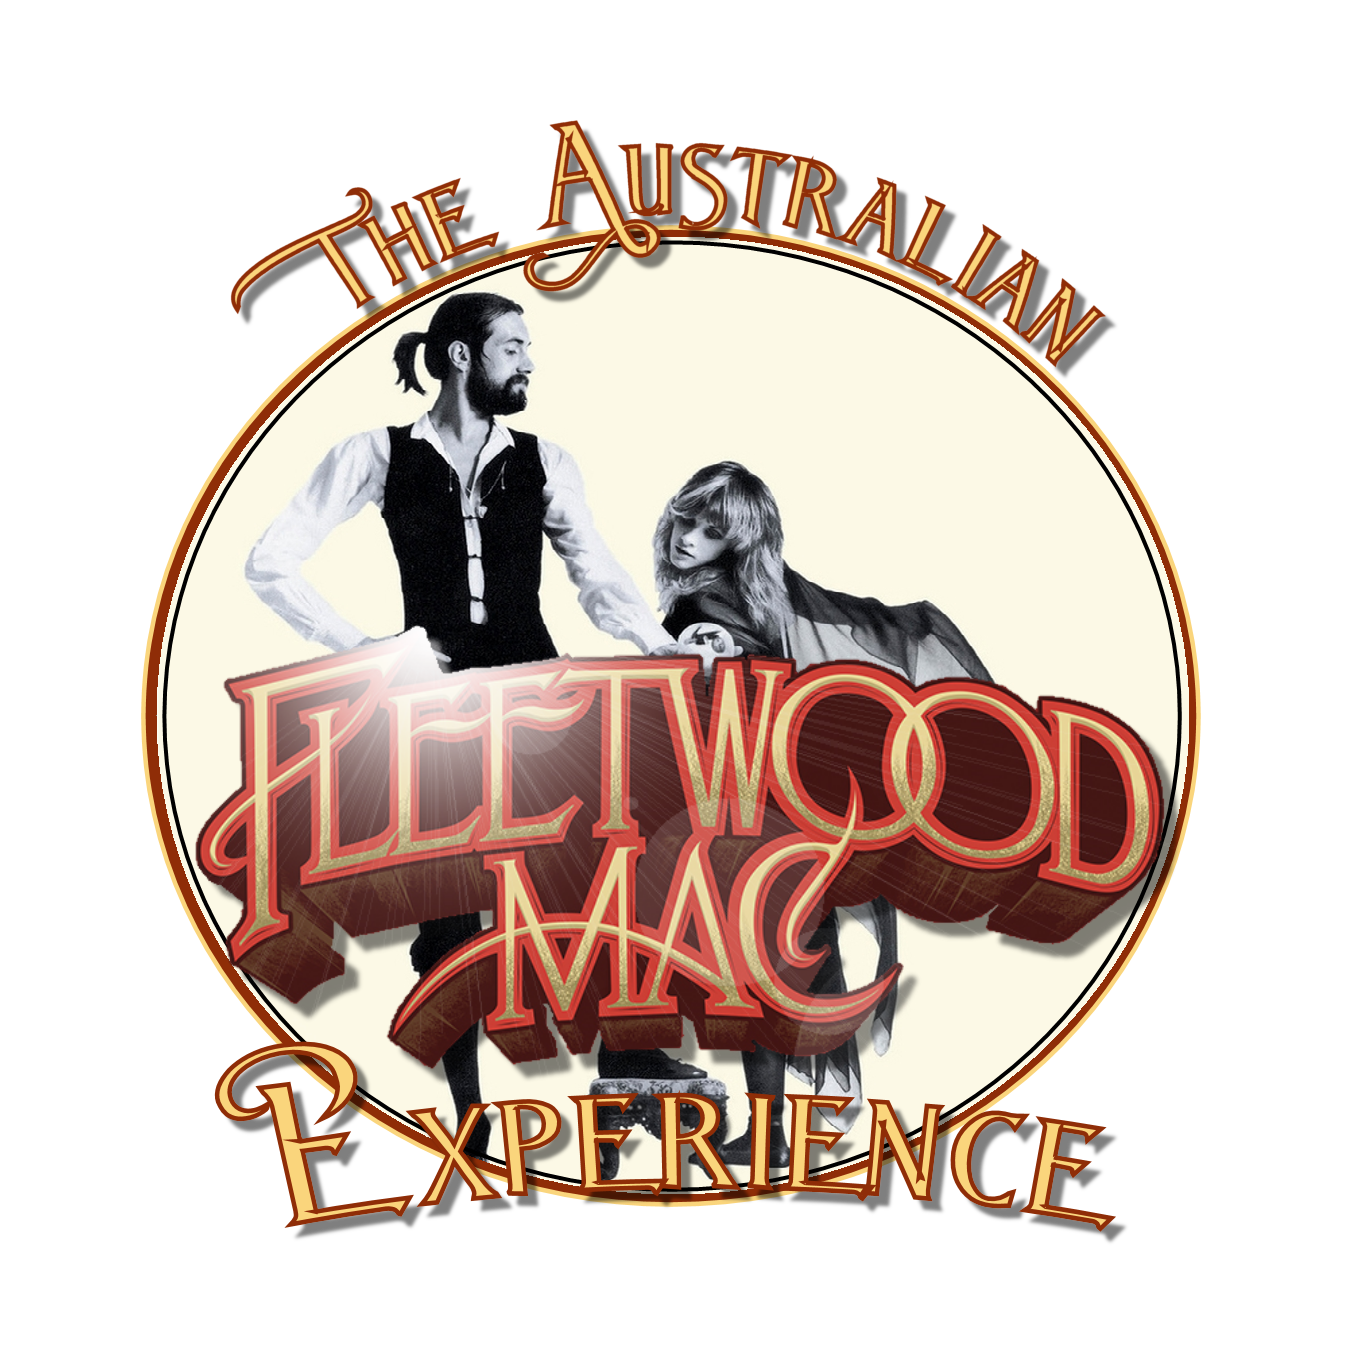 The Australian Fleetwood Mac Experience